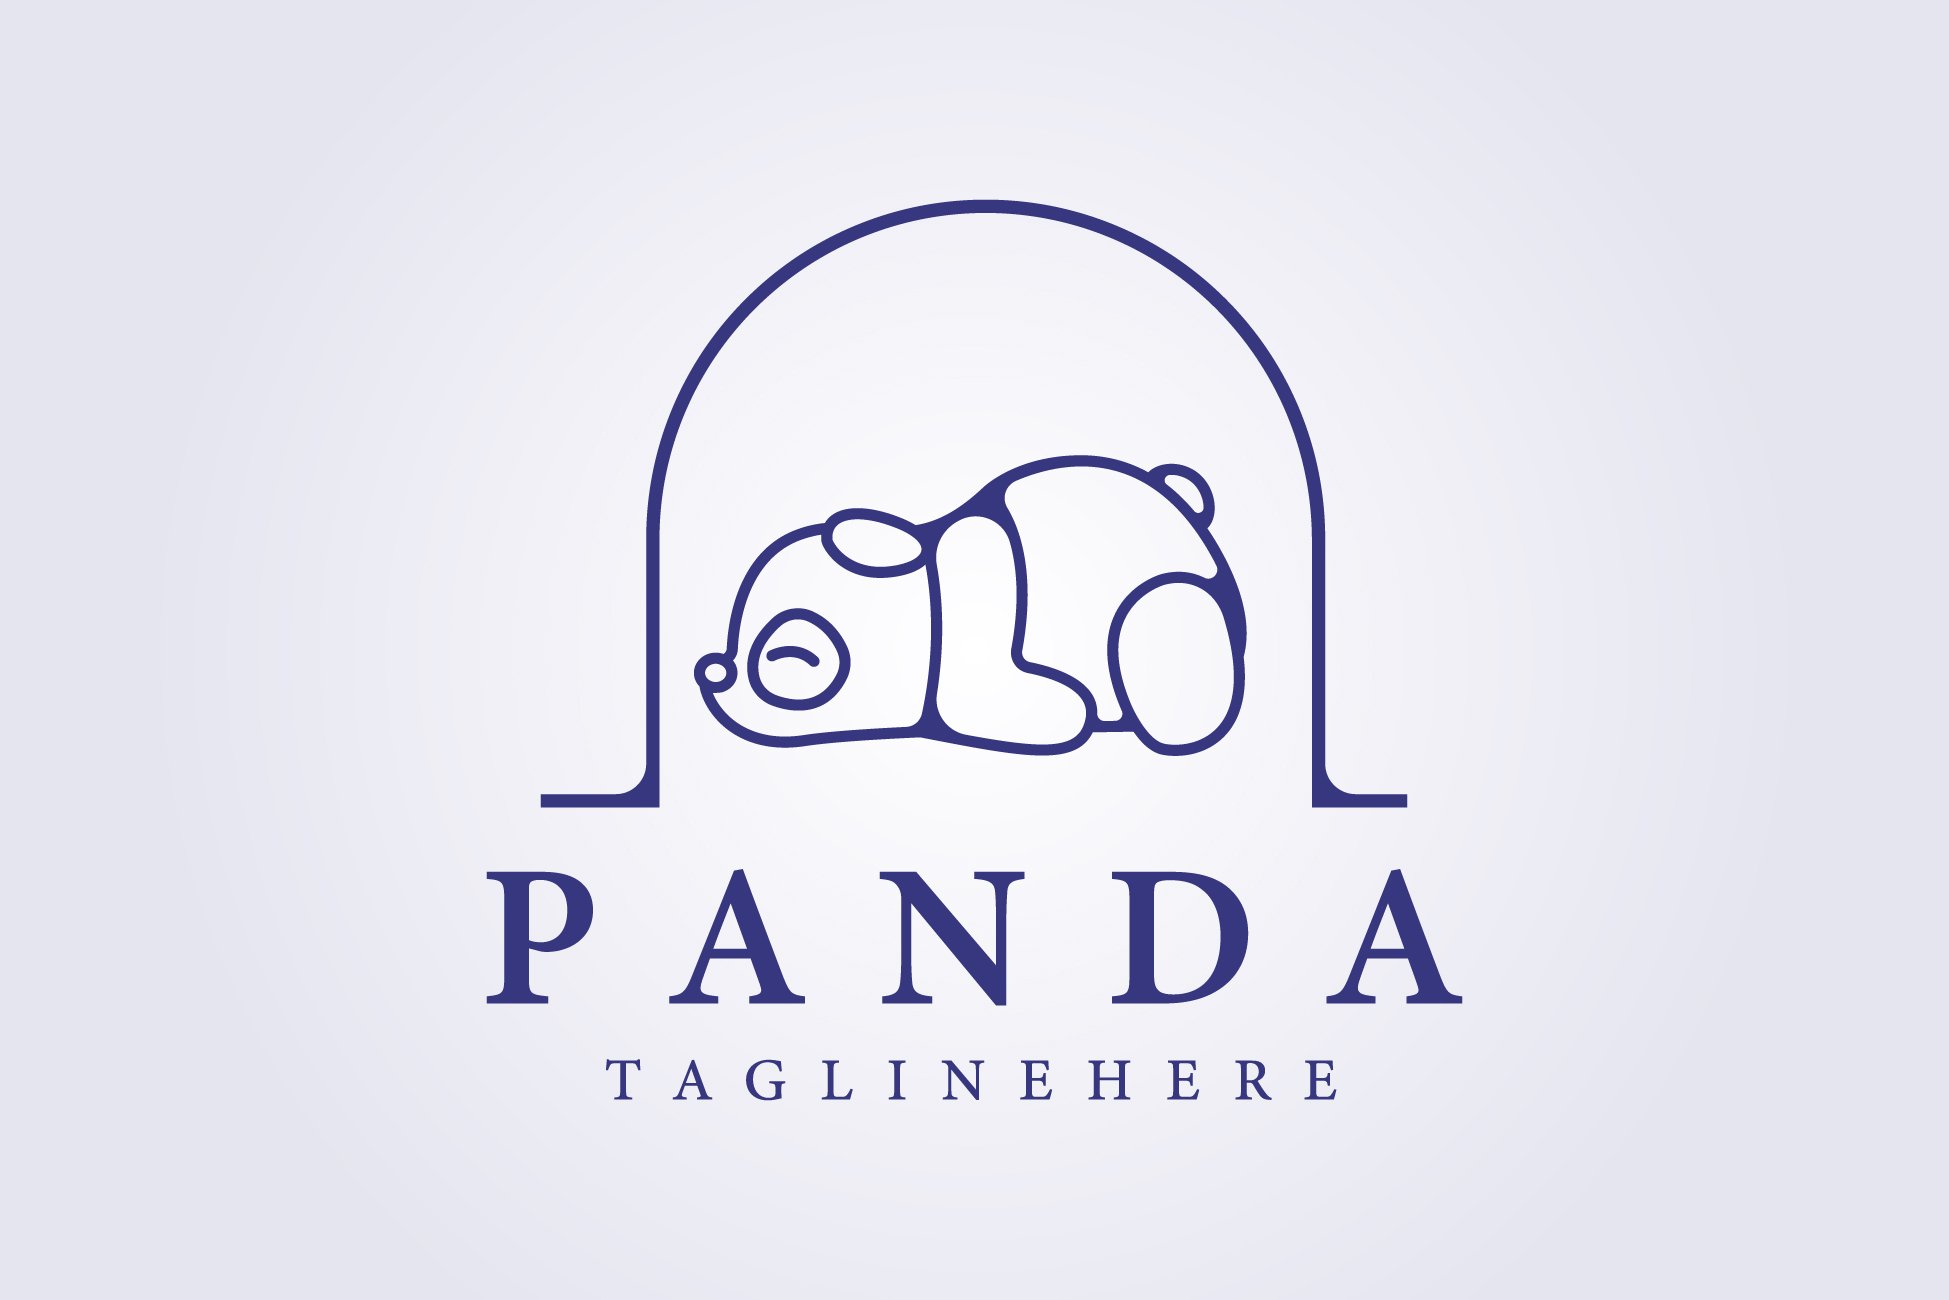 monoline sleeping panda logo icon cover image.